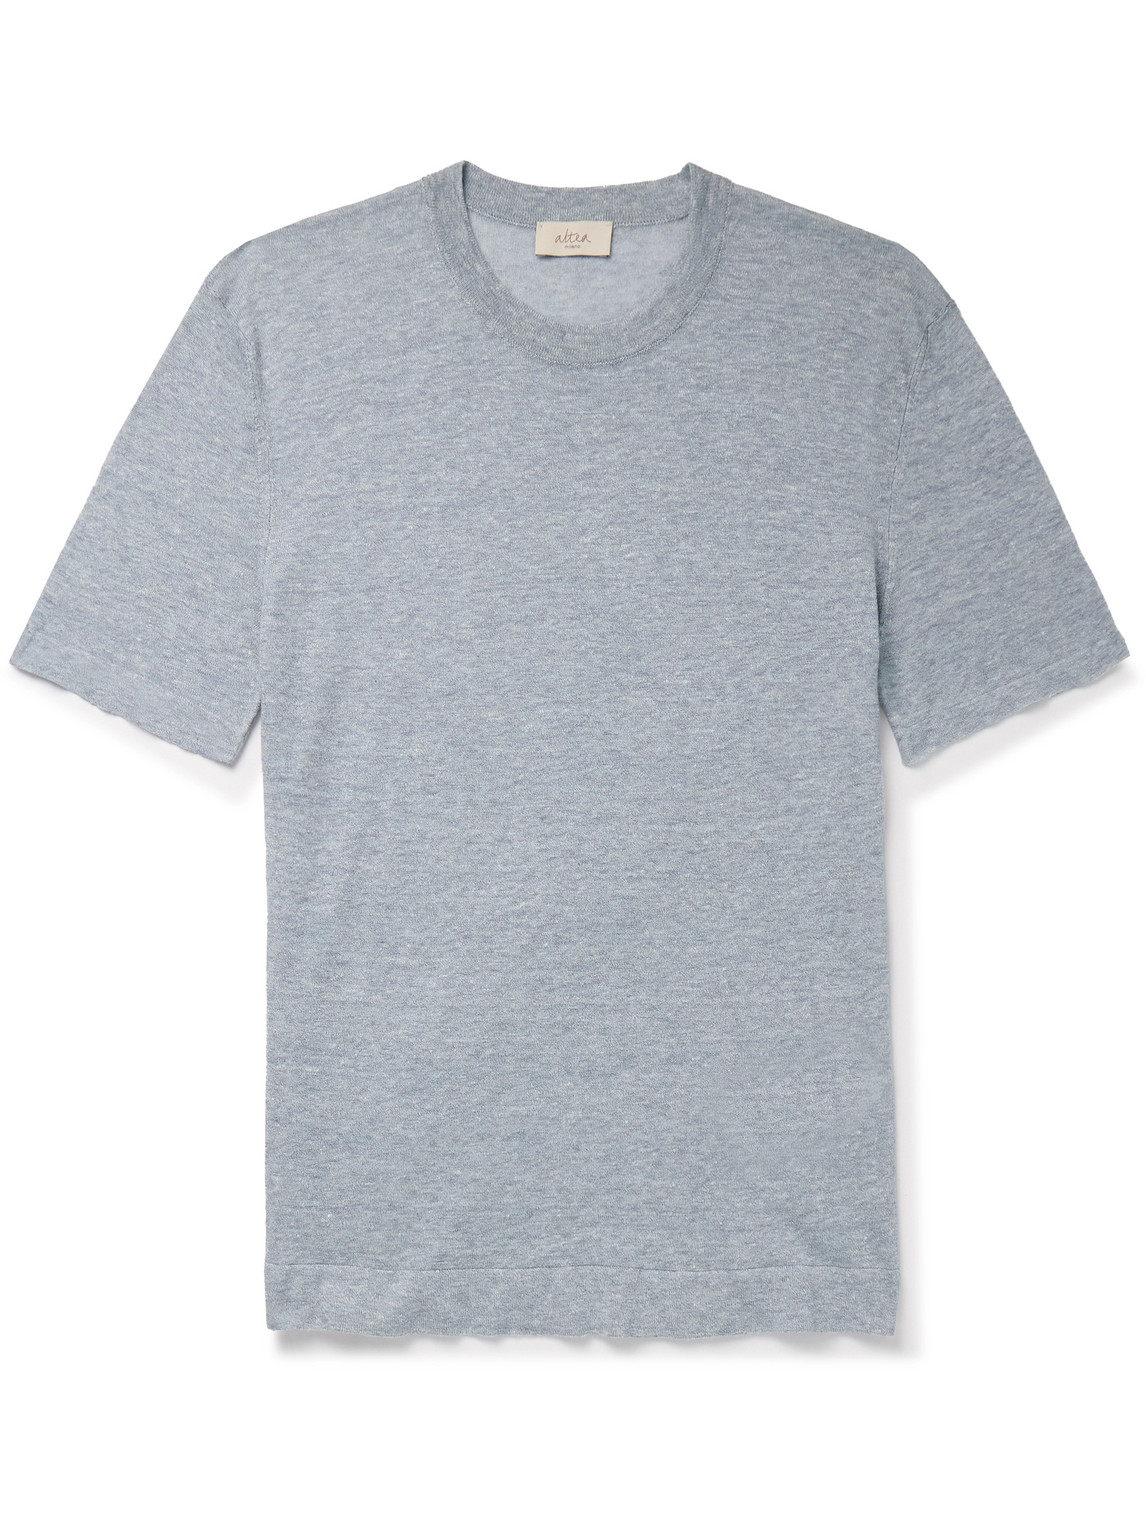 Altea - Linen and Cotton-Blend Jersey T-Shirt - Men - Blue - L von Altea